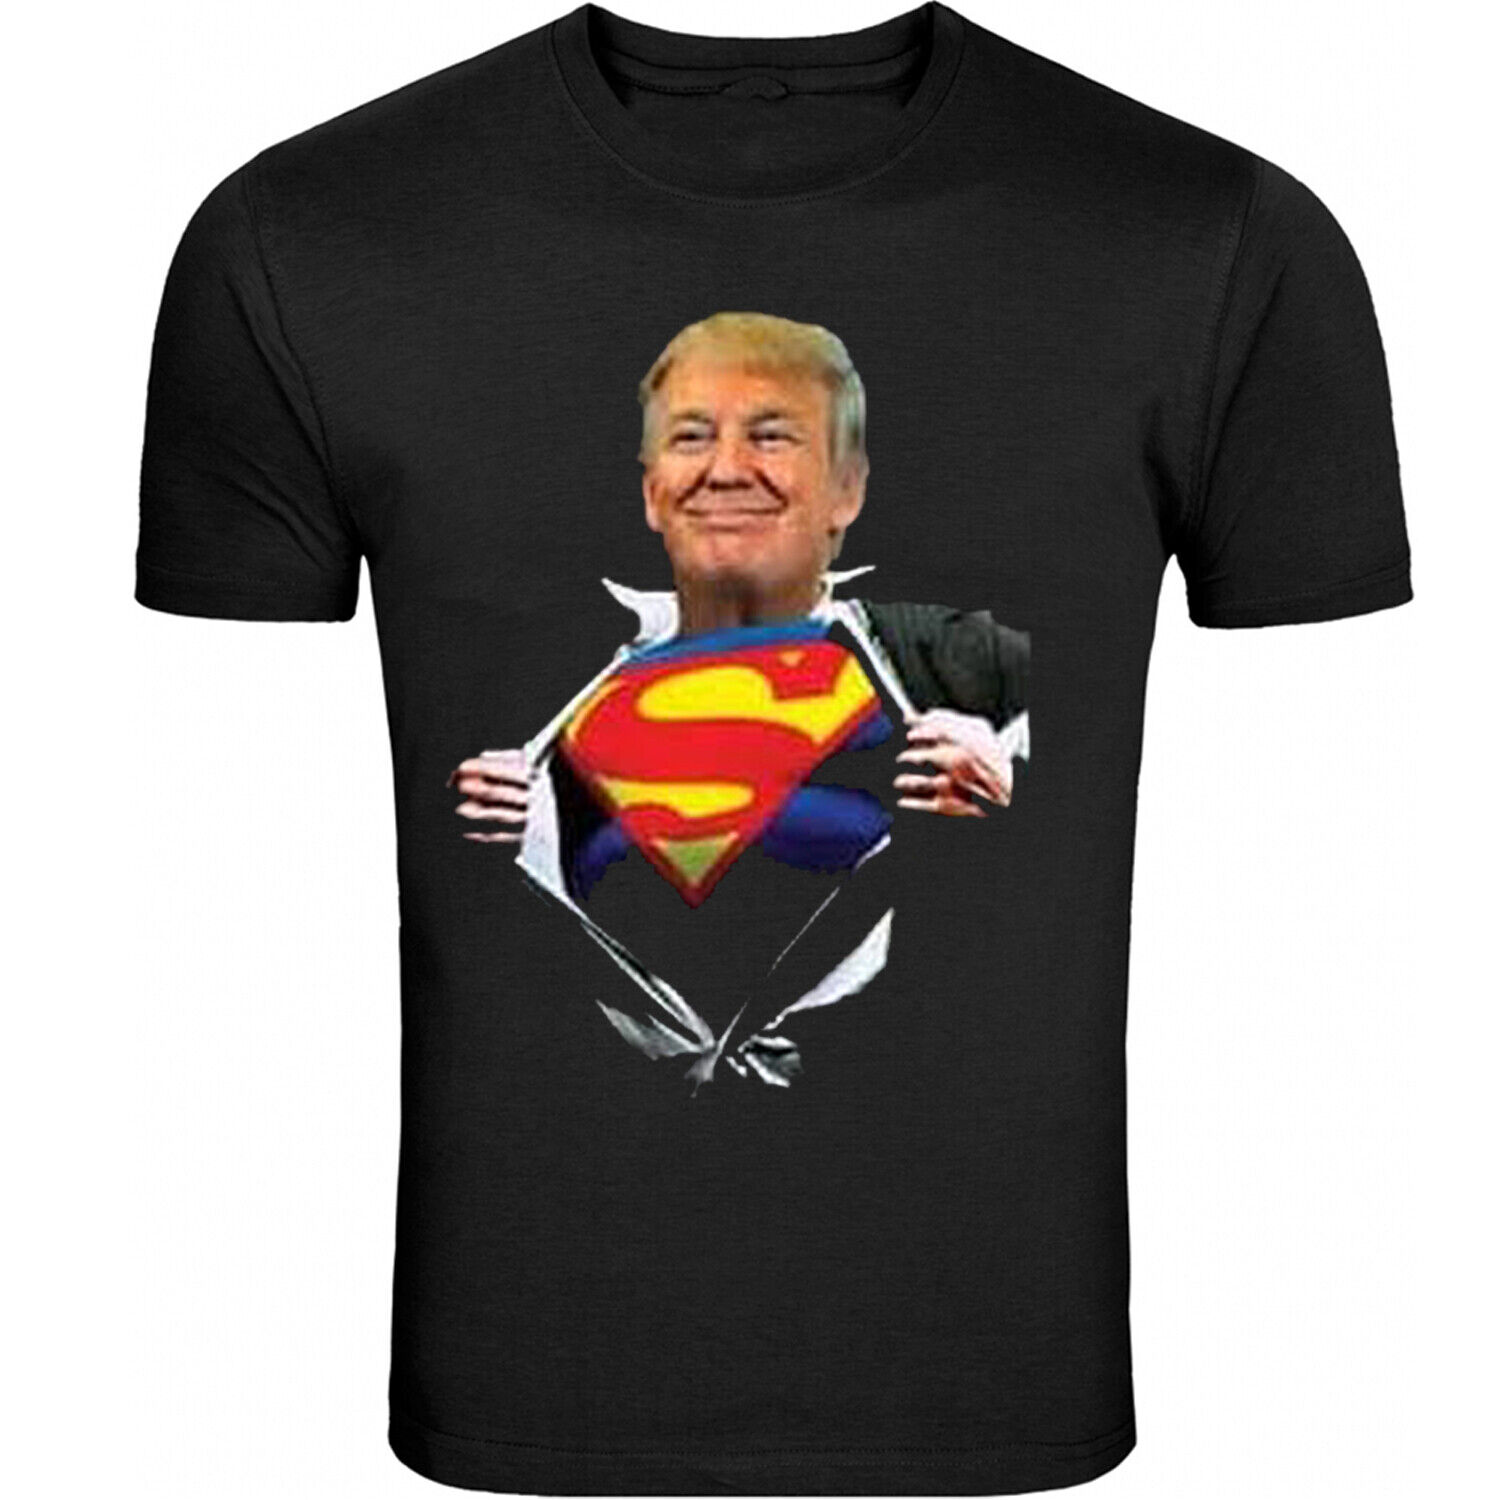 Super Donald Trump Tee for President Make America Great Again Unisex T-Shirt Tee